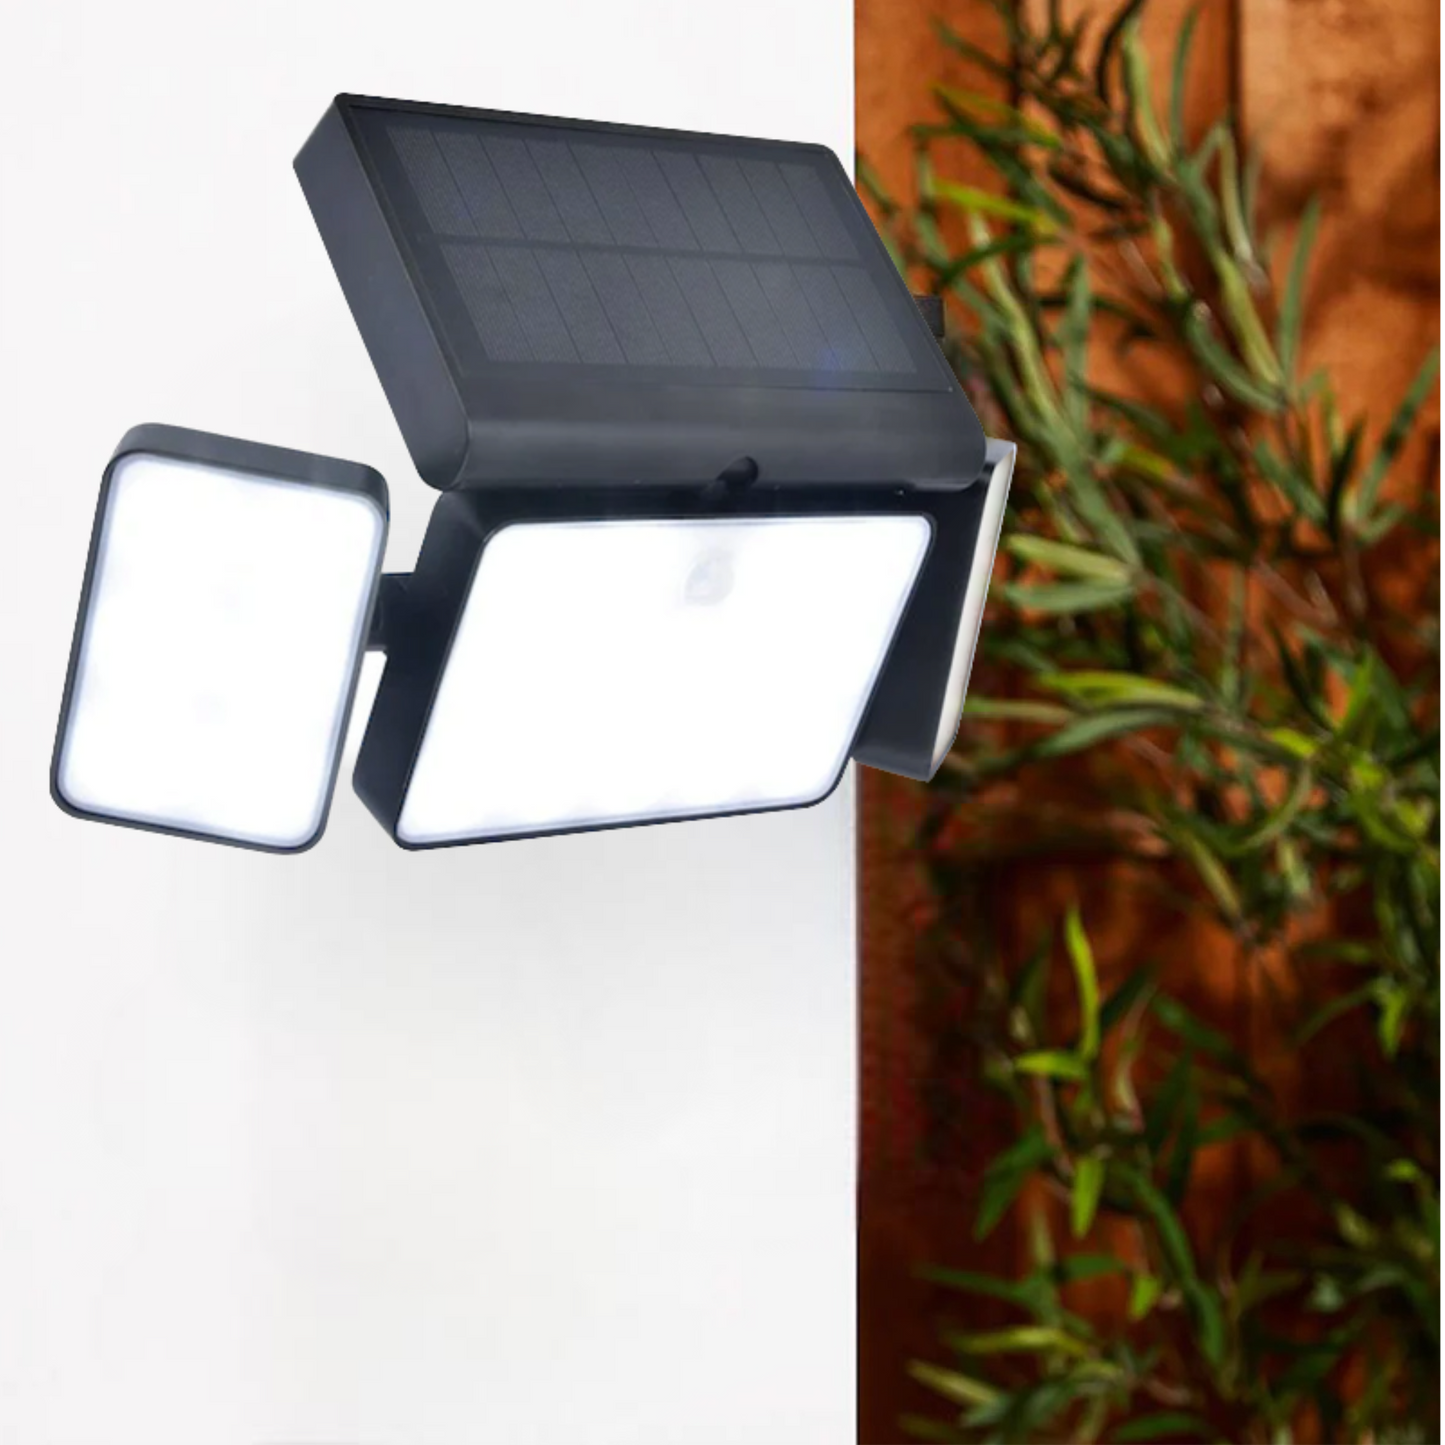 CGC KELIS 3 Light PIR Motion Sensor Solar LED Security Outdoor Wall Light Floodlight